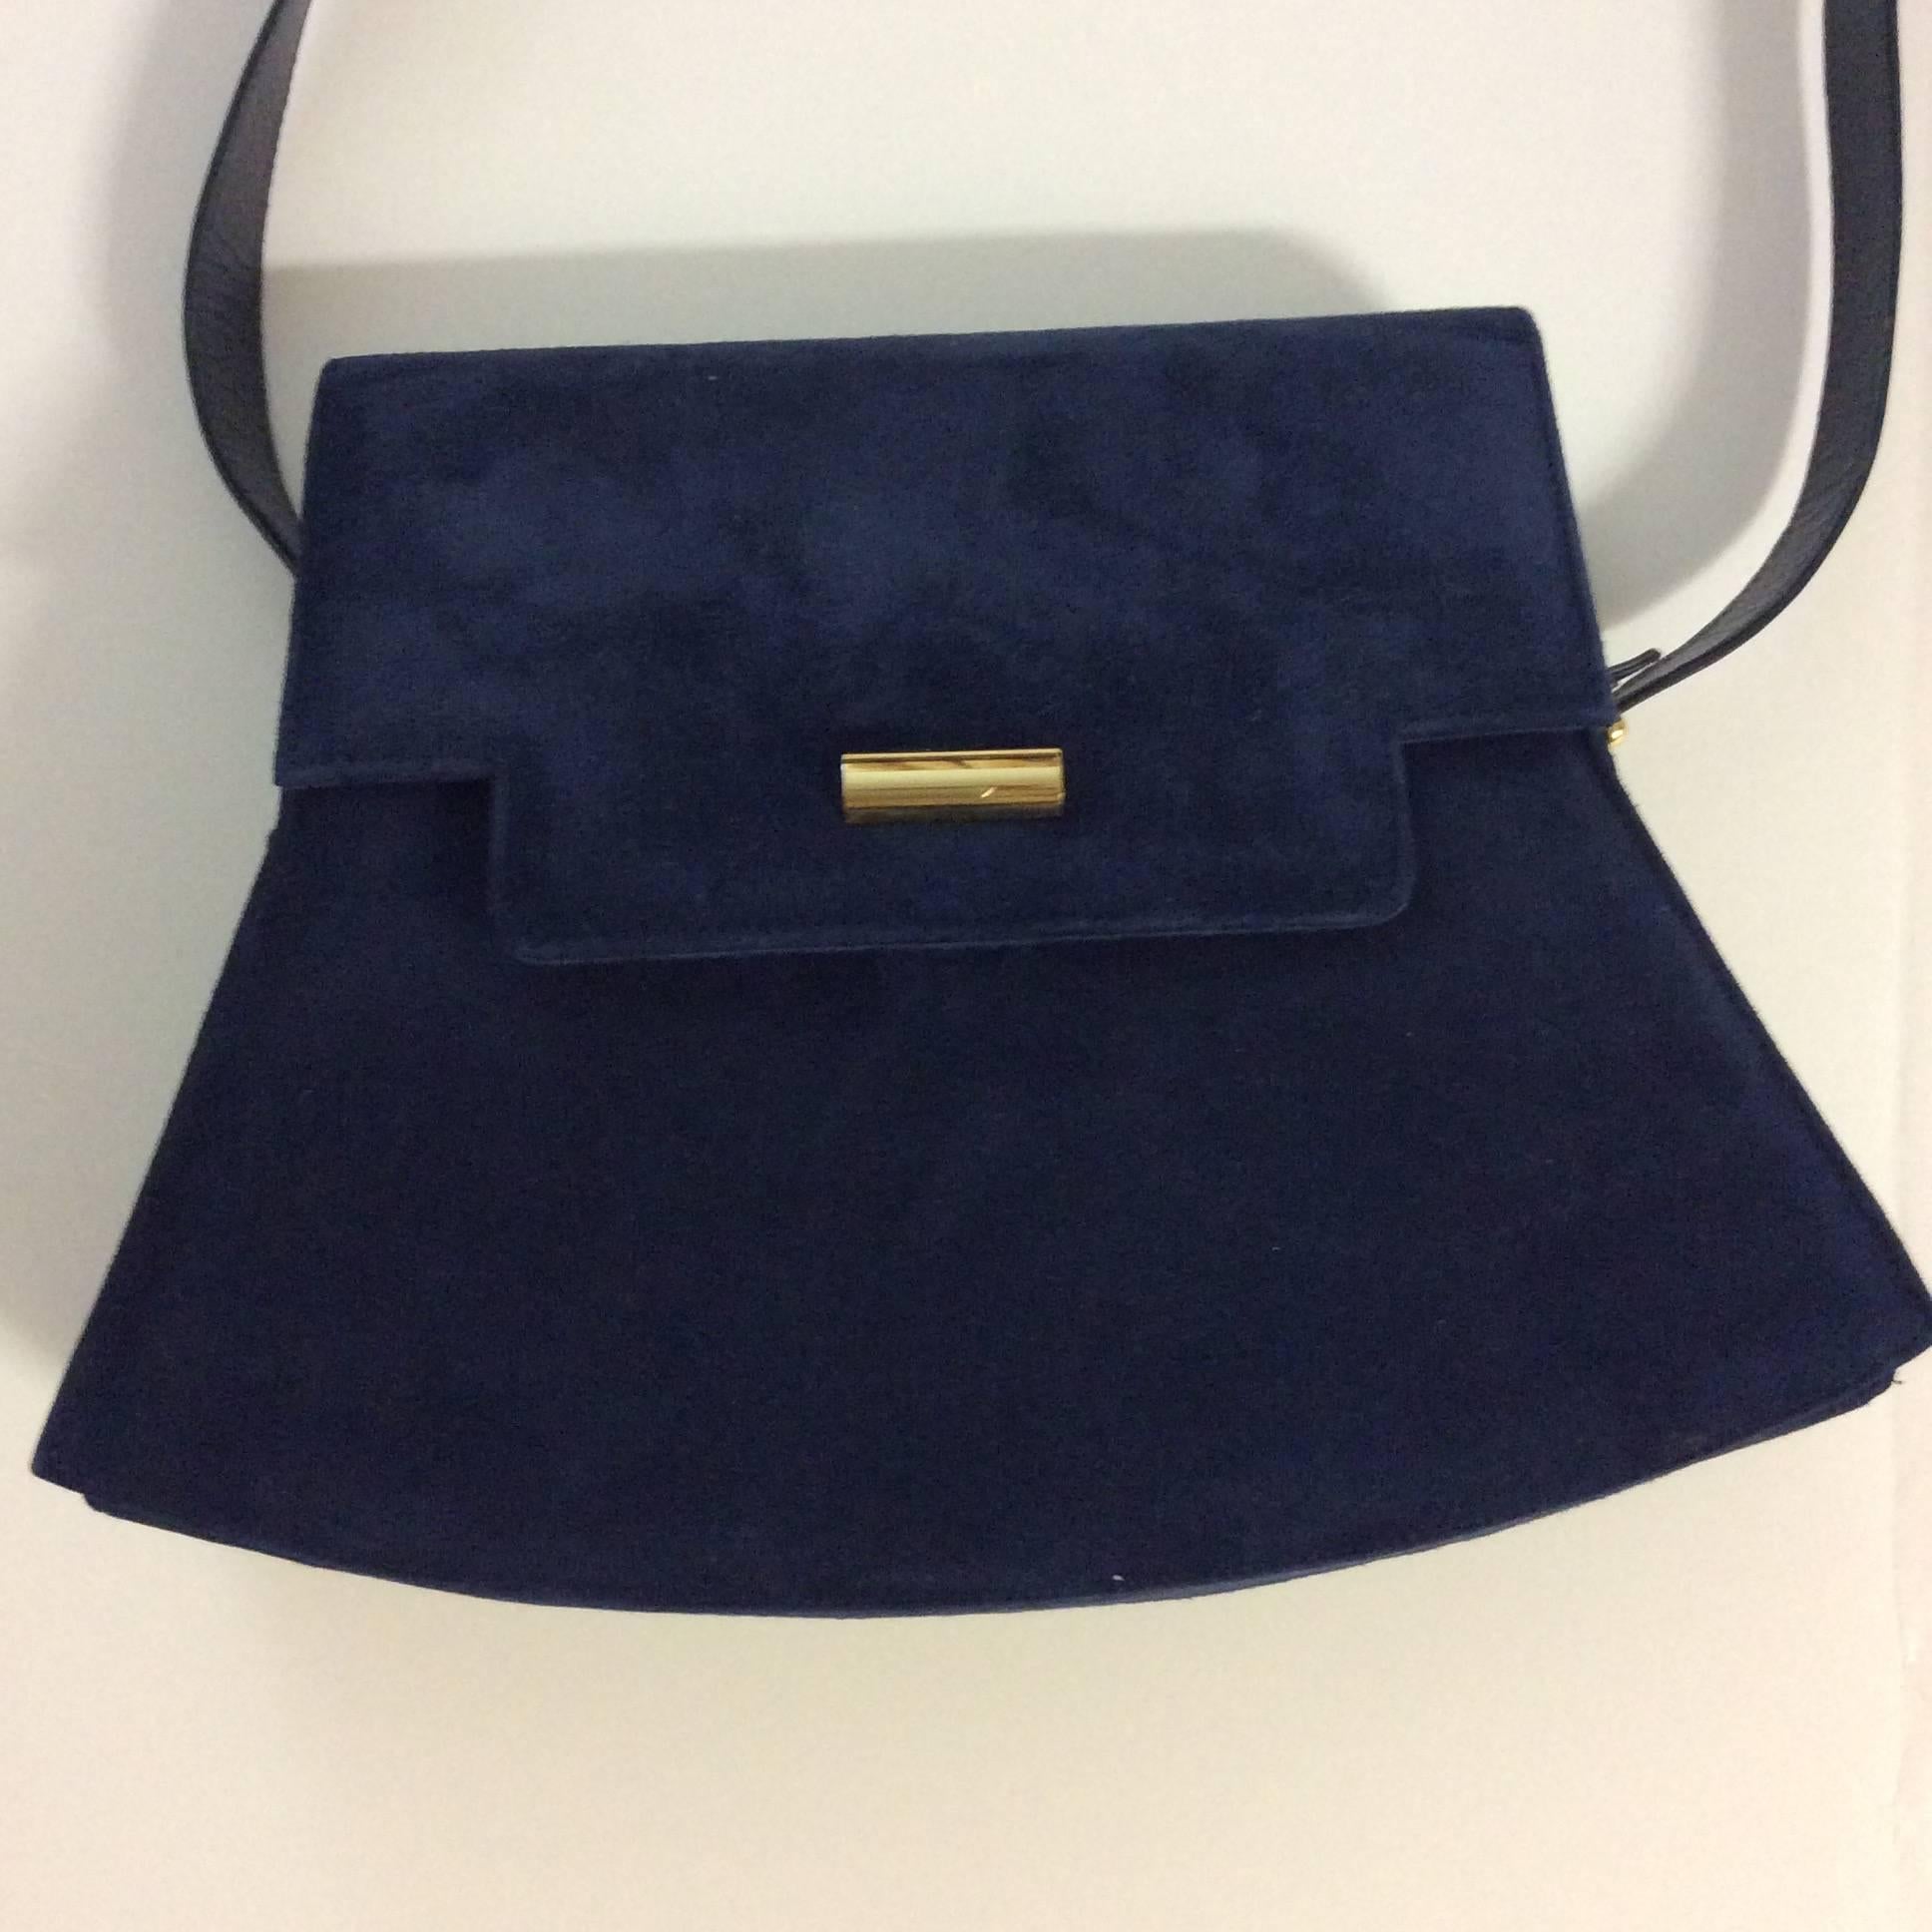 Charles Jourdan New Blue Purse / Handbag In New Condition For Sale In Boca Raton, FL